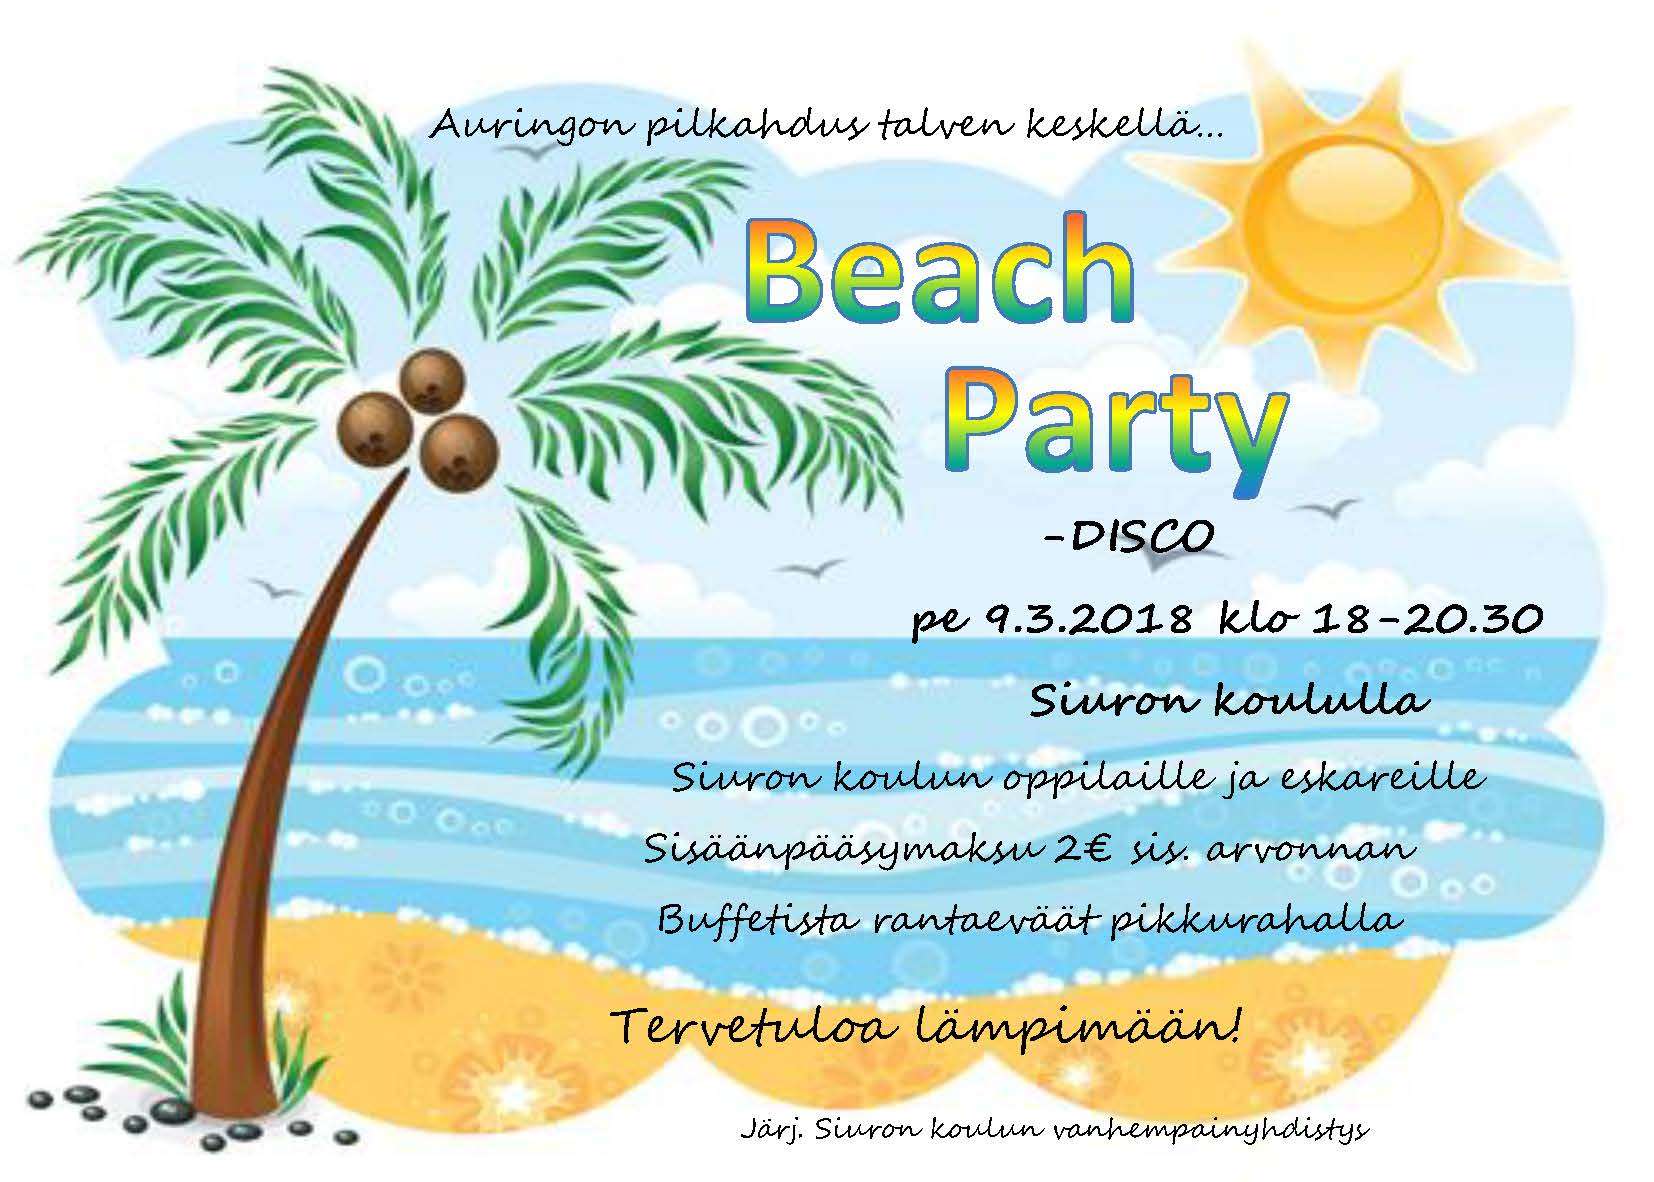 Beach Party kutsu